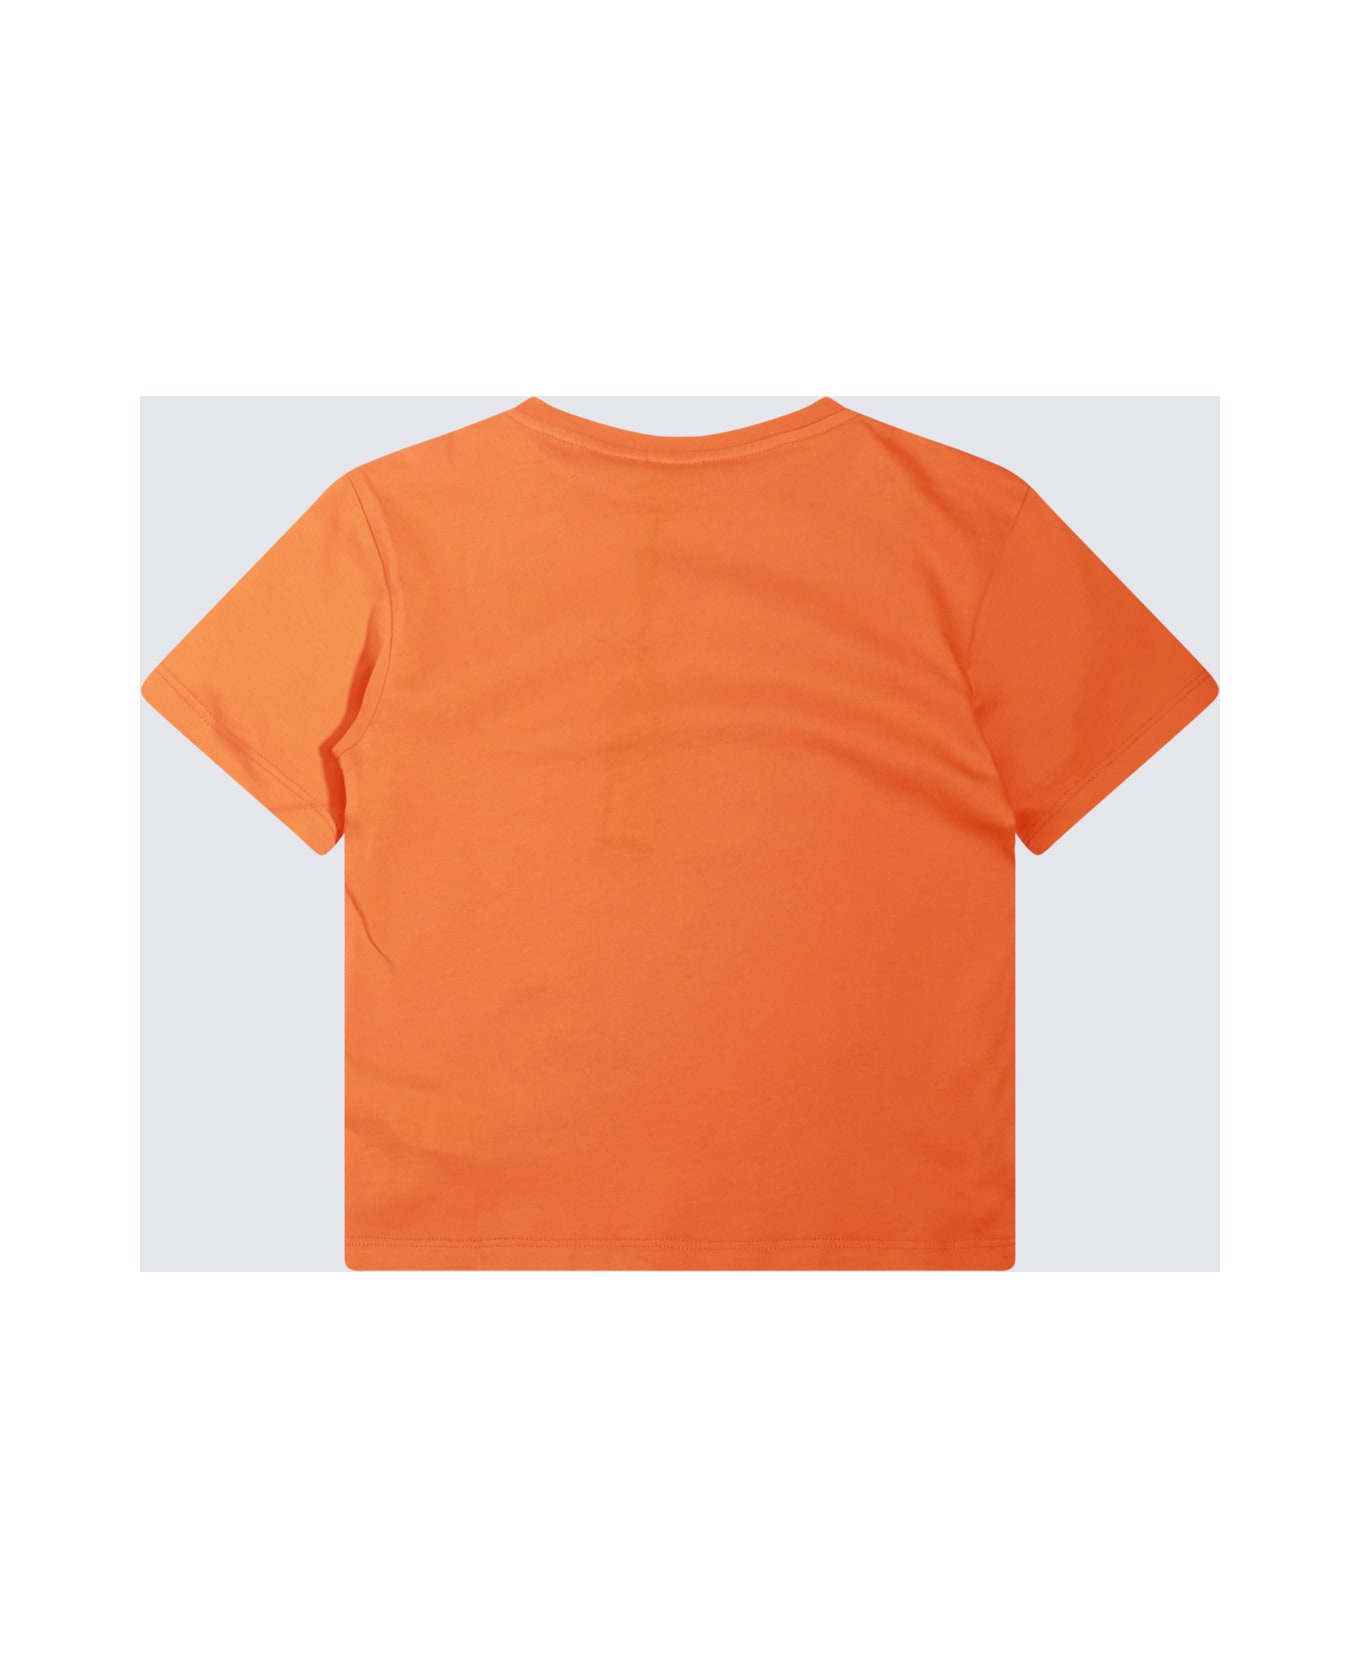 Dolce & Gabbana Orange Cotton T-shirt - Orange